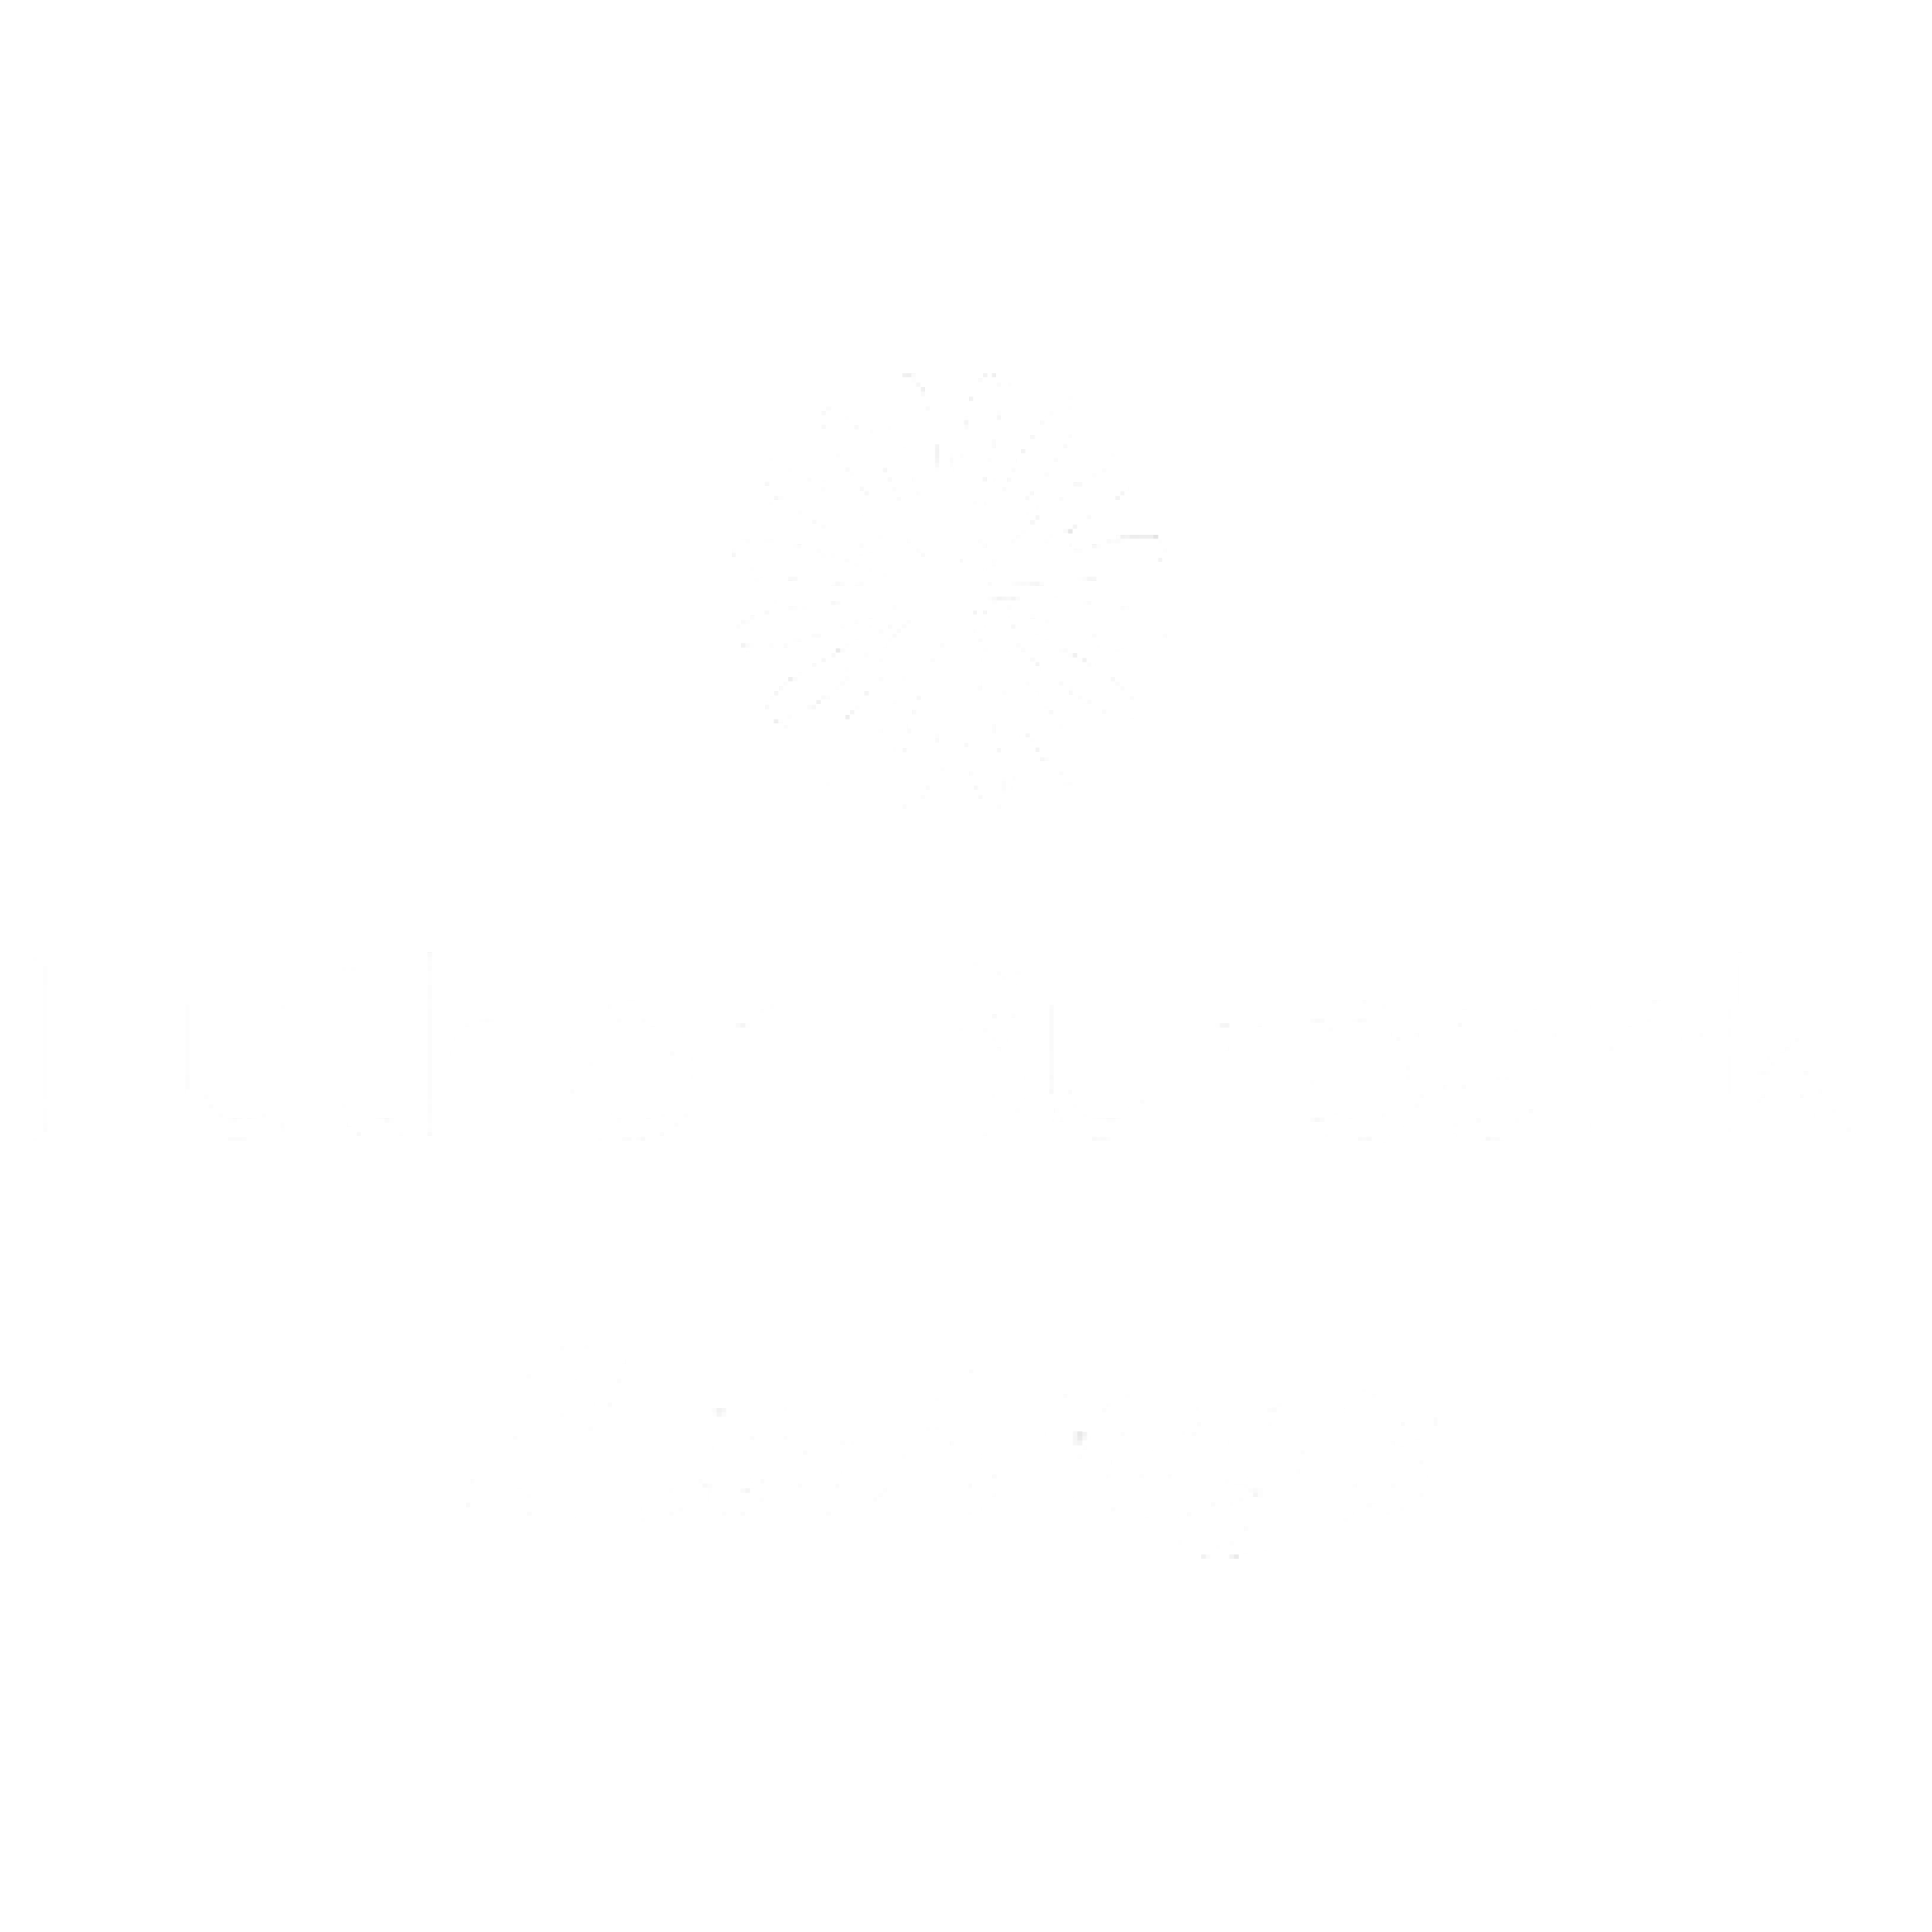 Luther Burbank Savings.png